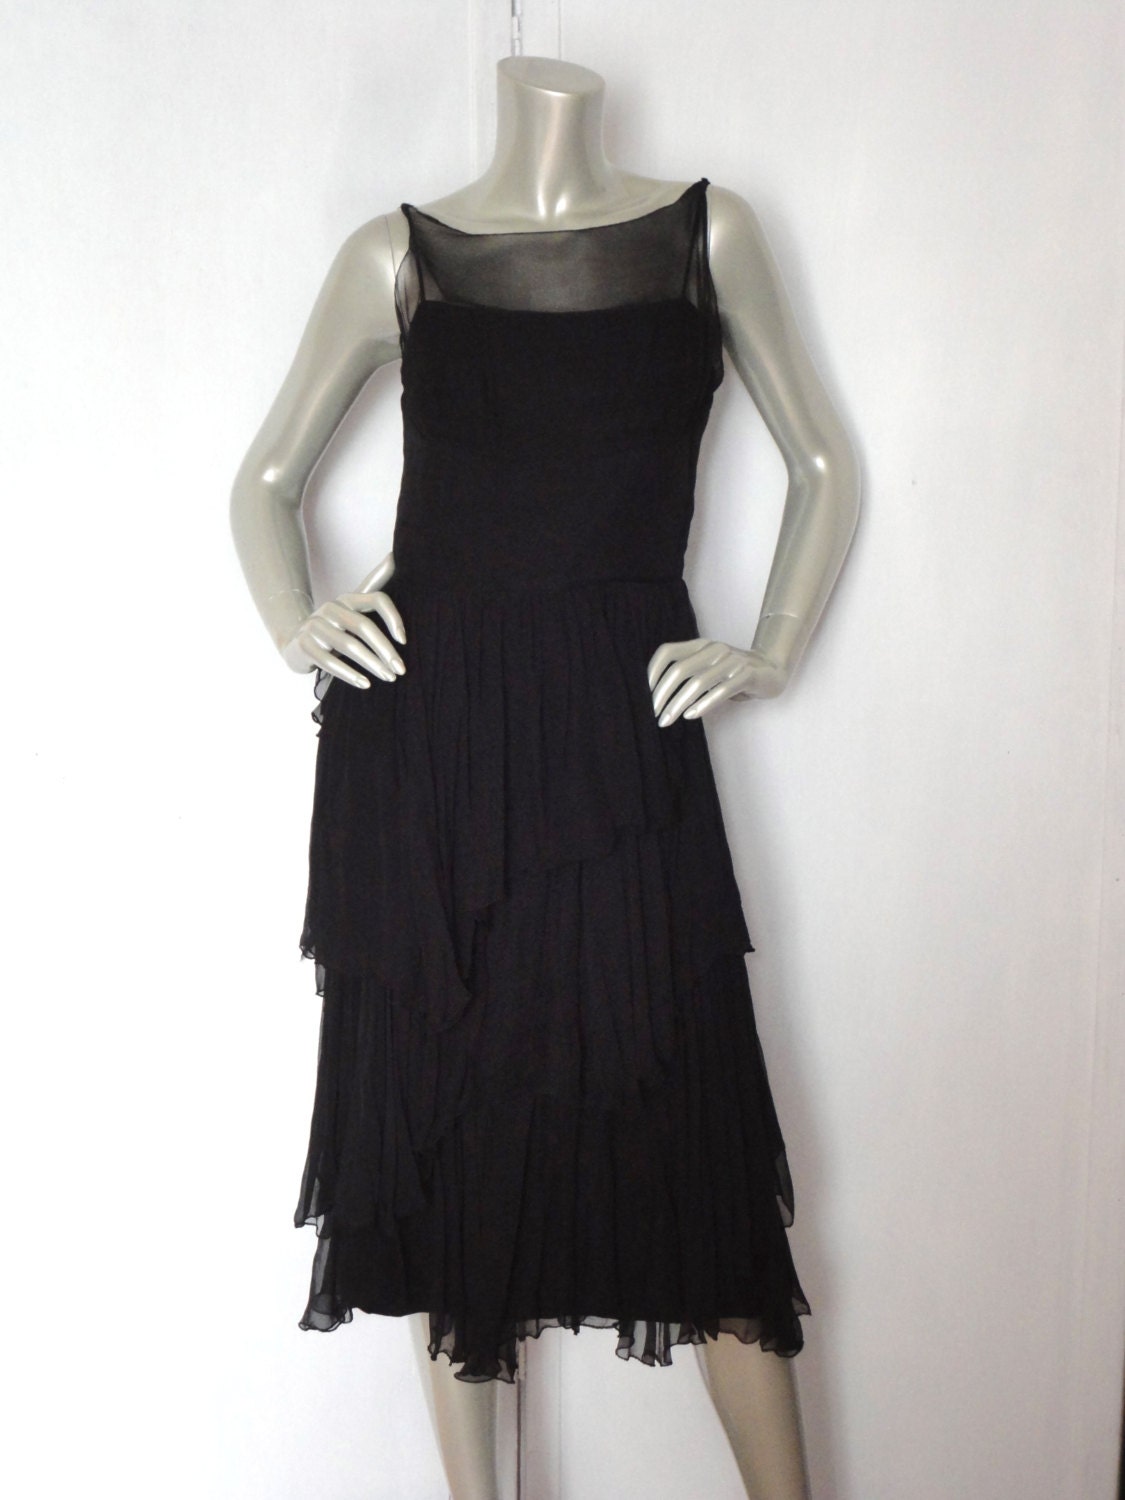 60s Black Cocktail Dress / Vintage Black by houseoflemoore on Etsy